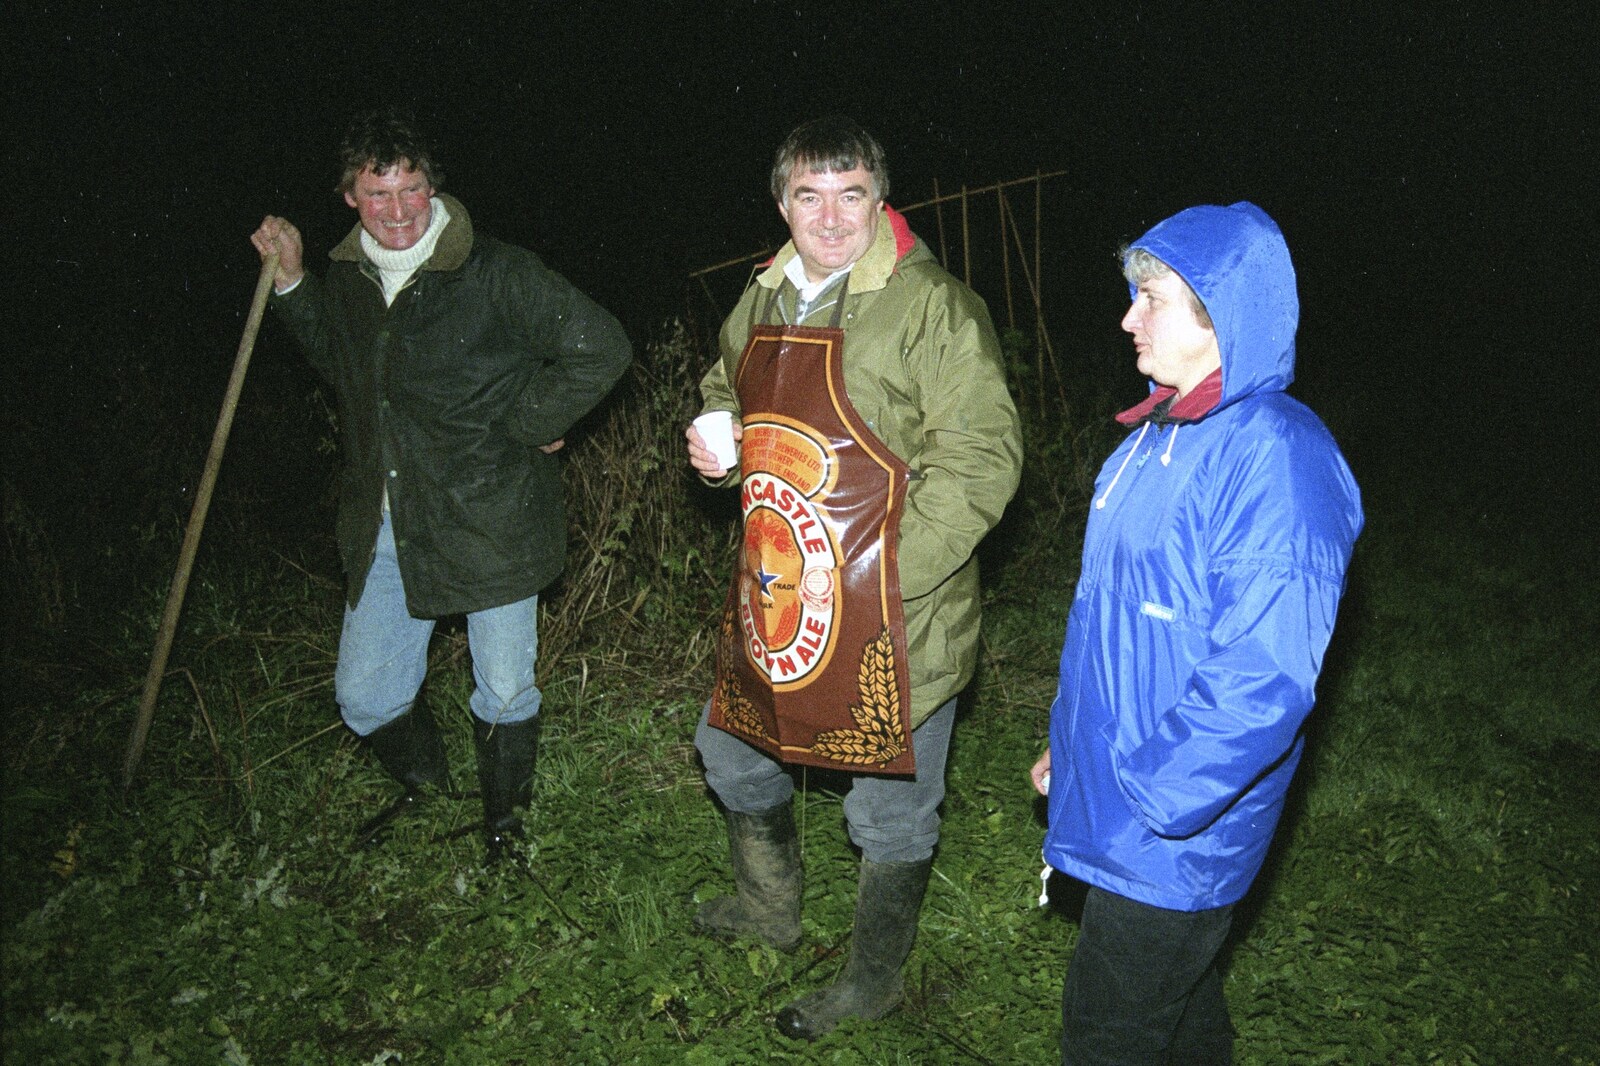 Geoff, Corky and Linda from Bonfire Night, Stuston, Suffolk - 5th November 1990